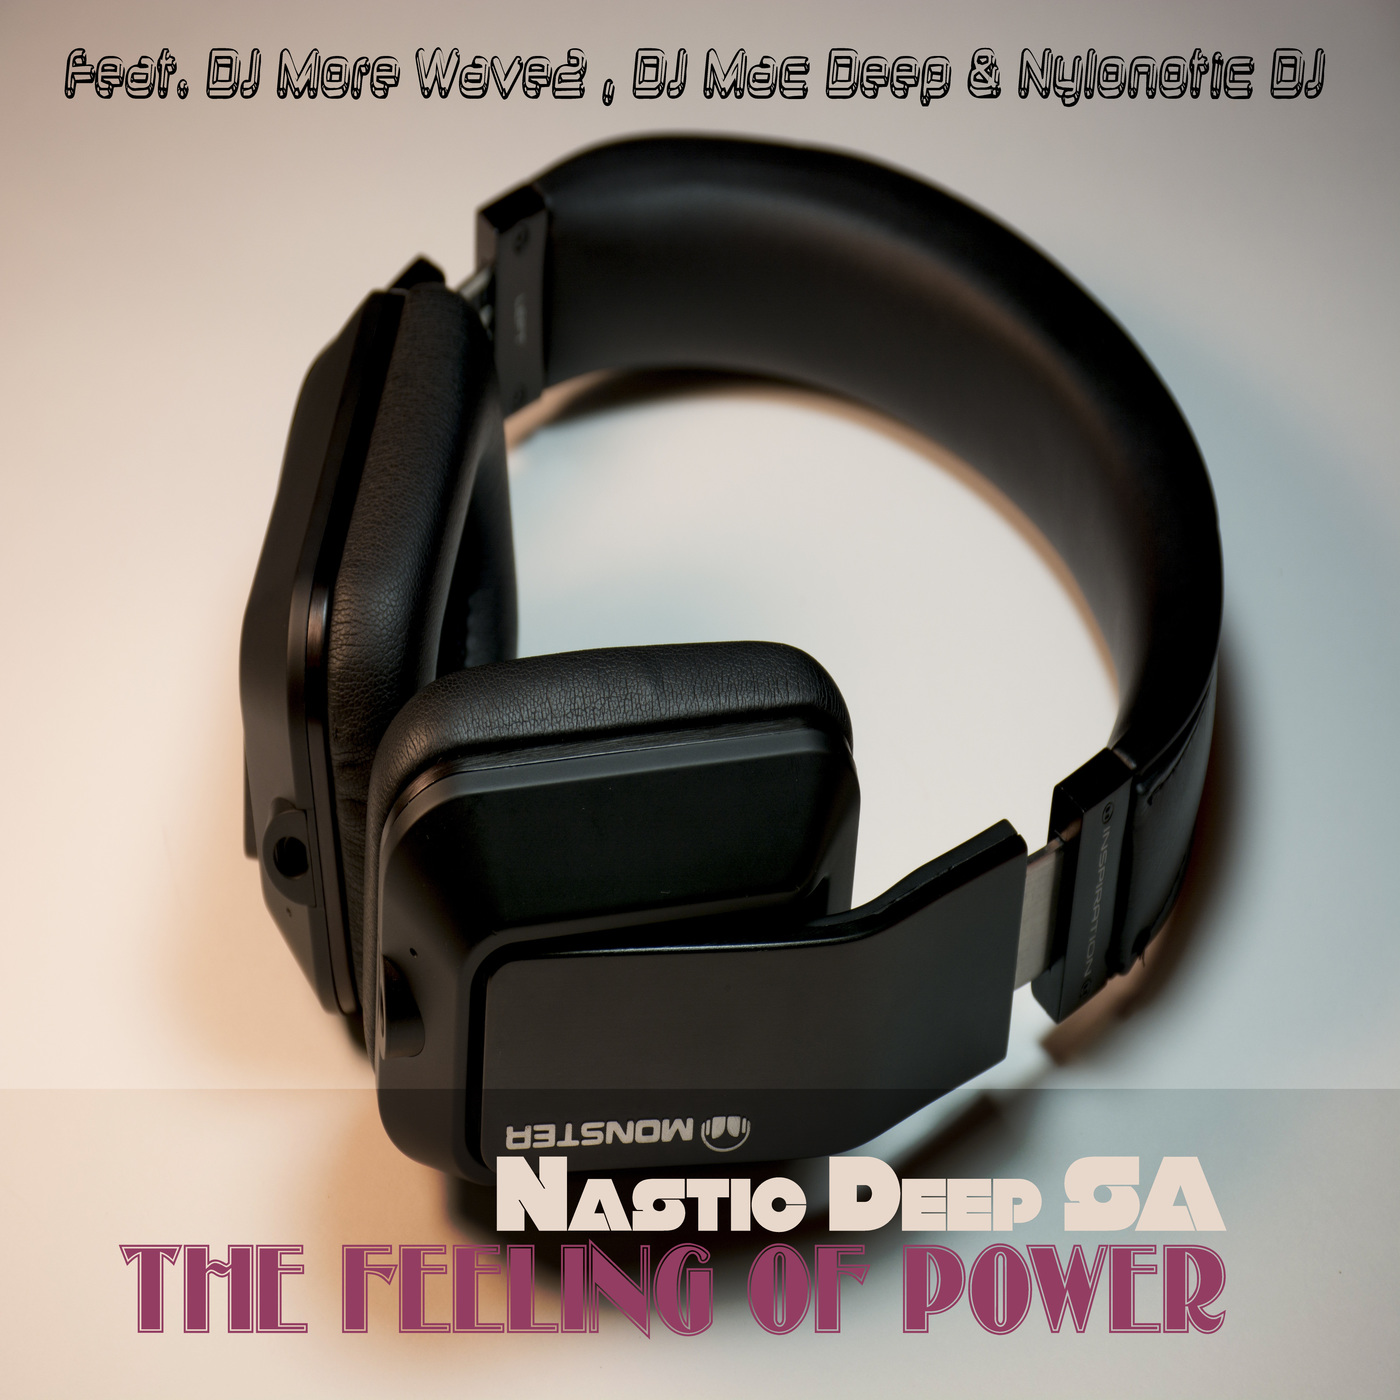 Nastic Deep SA feat. DJ More Wave2, DJ Mac Deep & Nylonotic DJ - The Feeling of Power / Dynastic Musiq